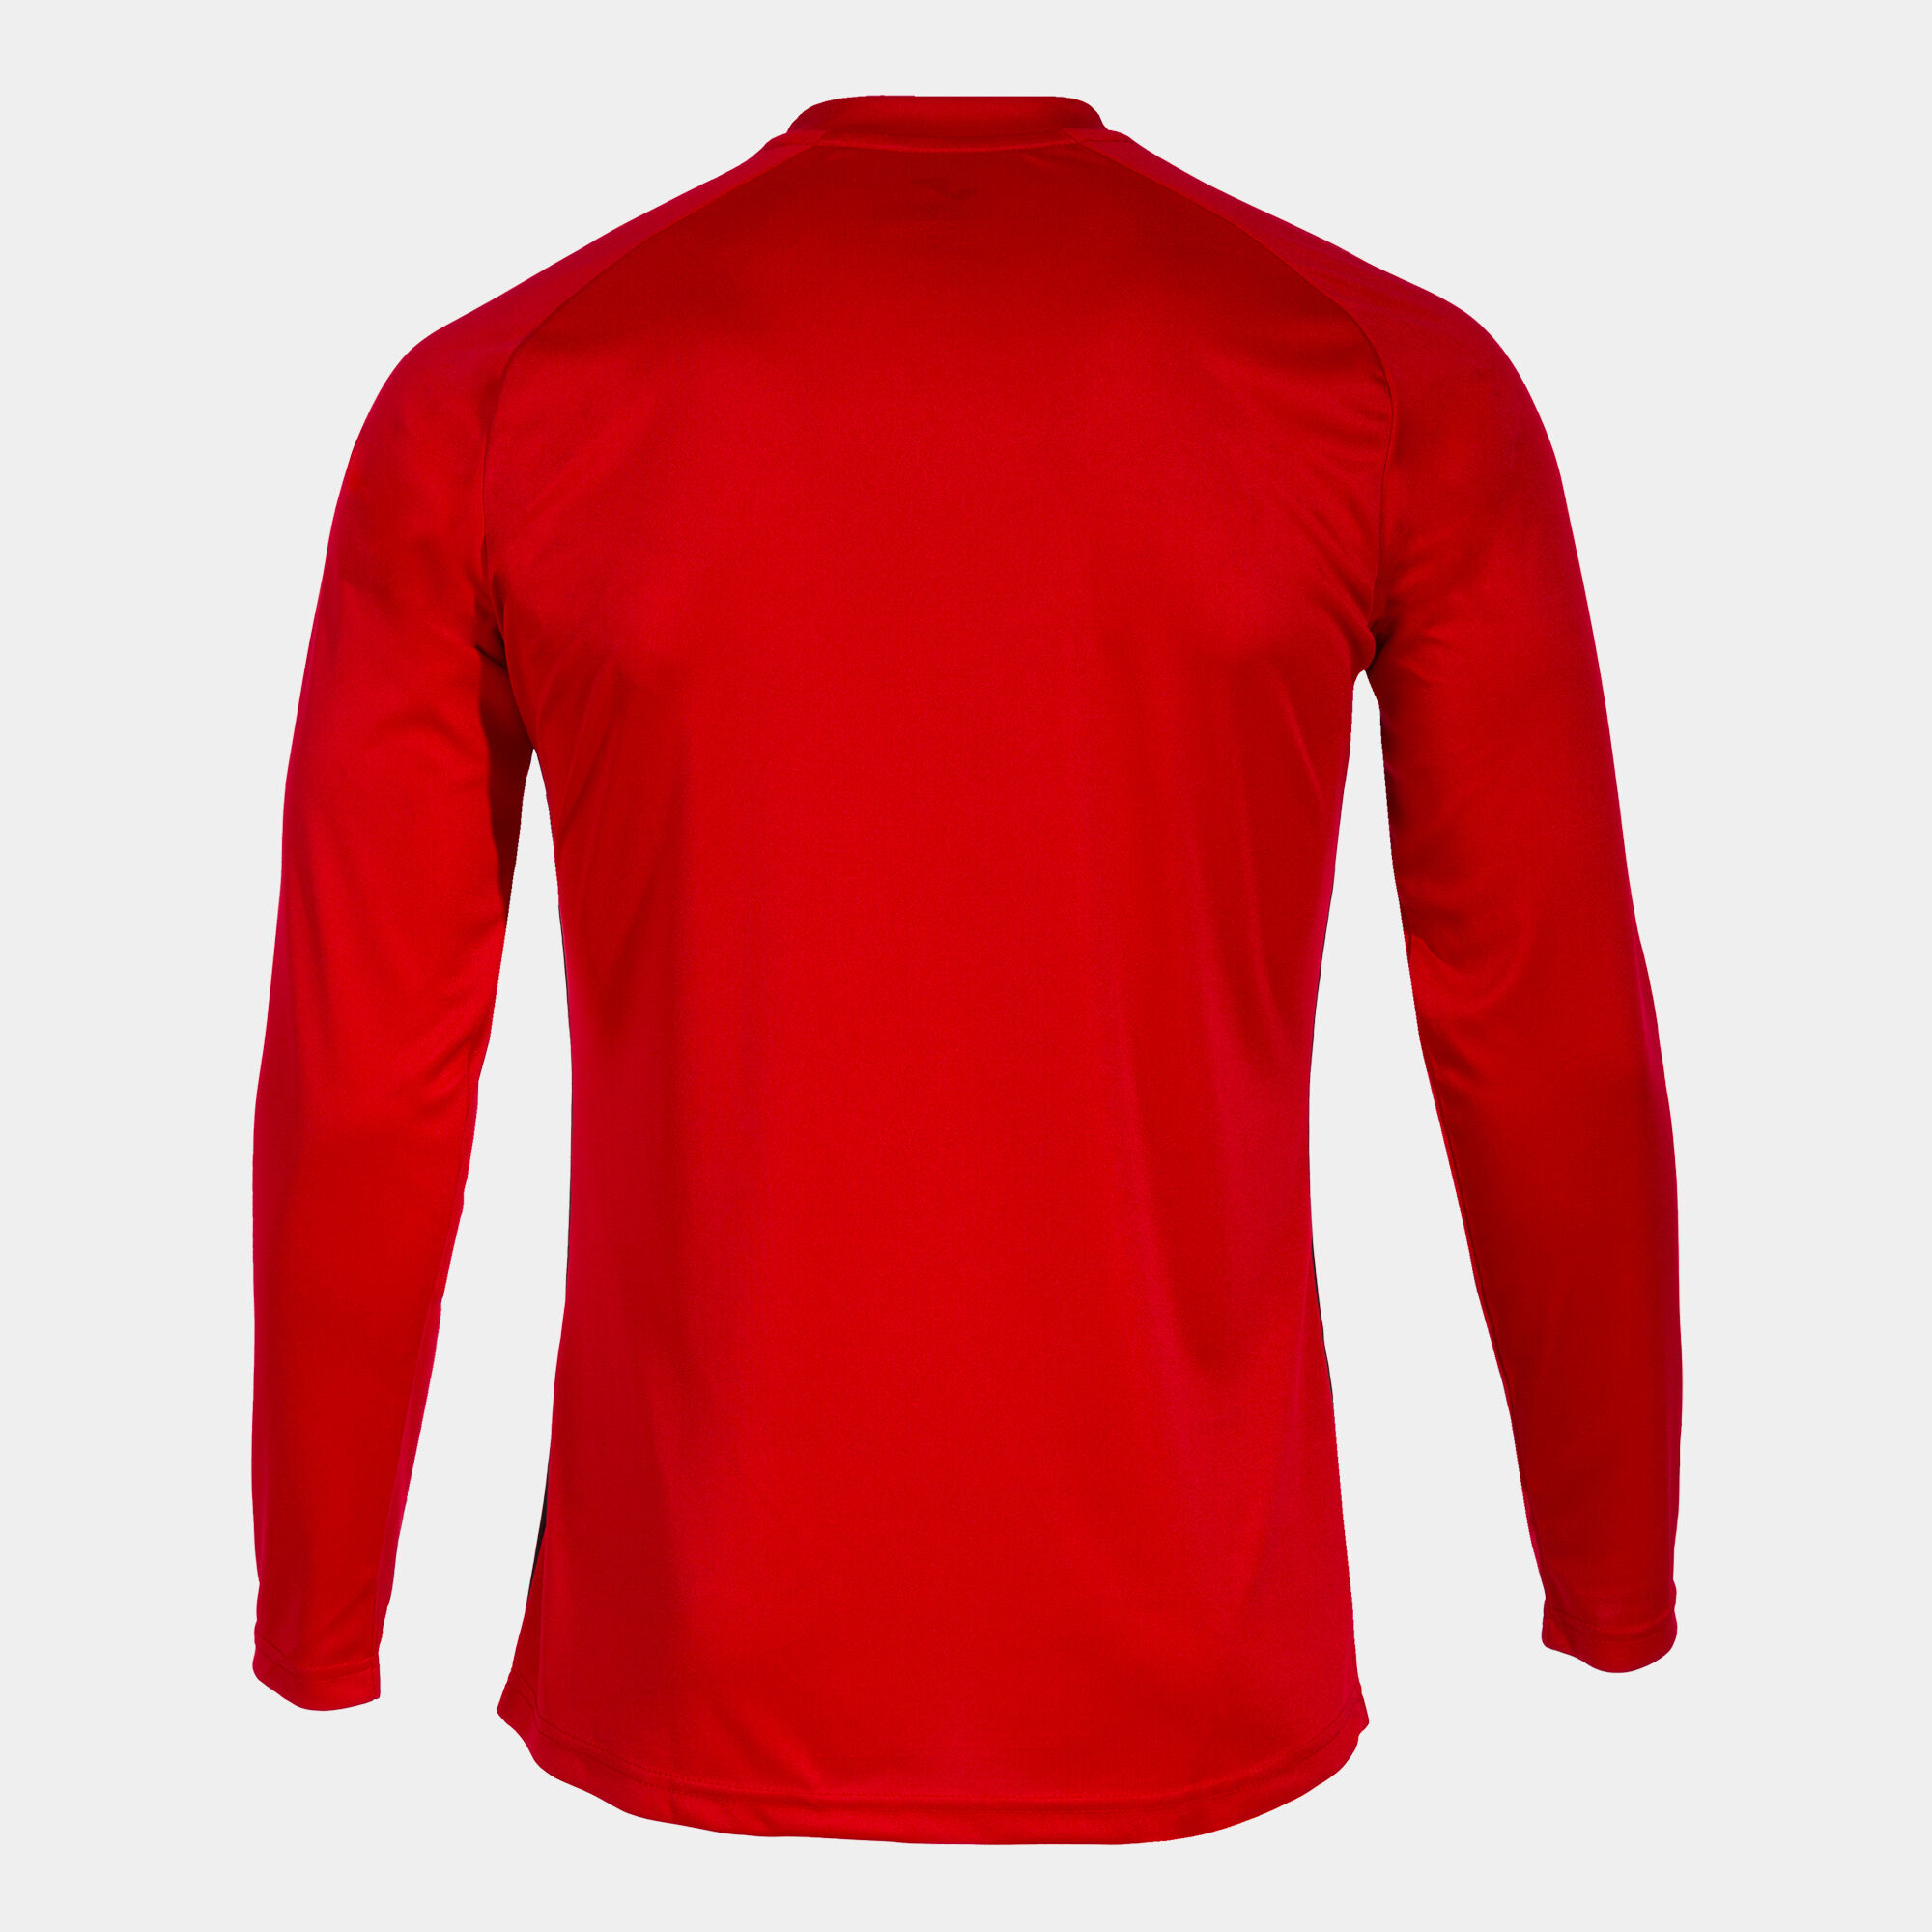 Camiseta manga larga hombre Pisa II rojo negro